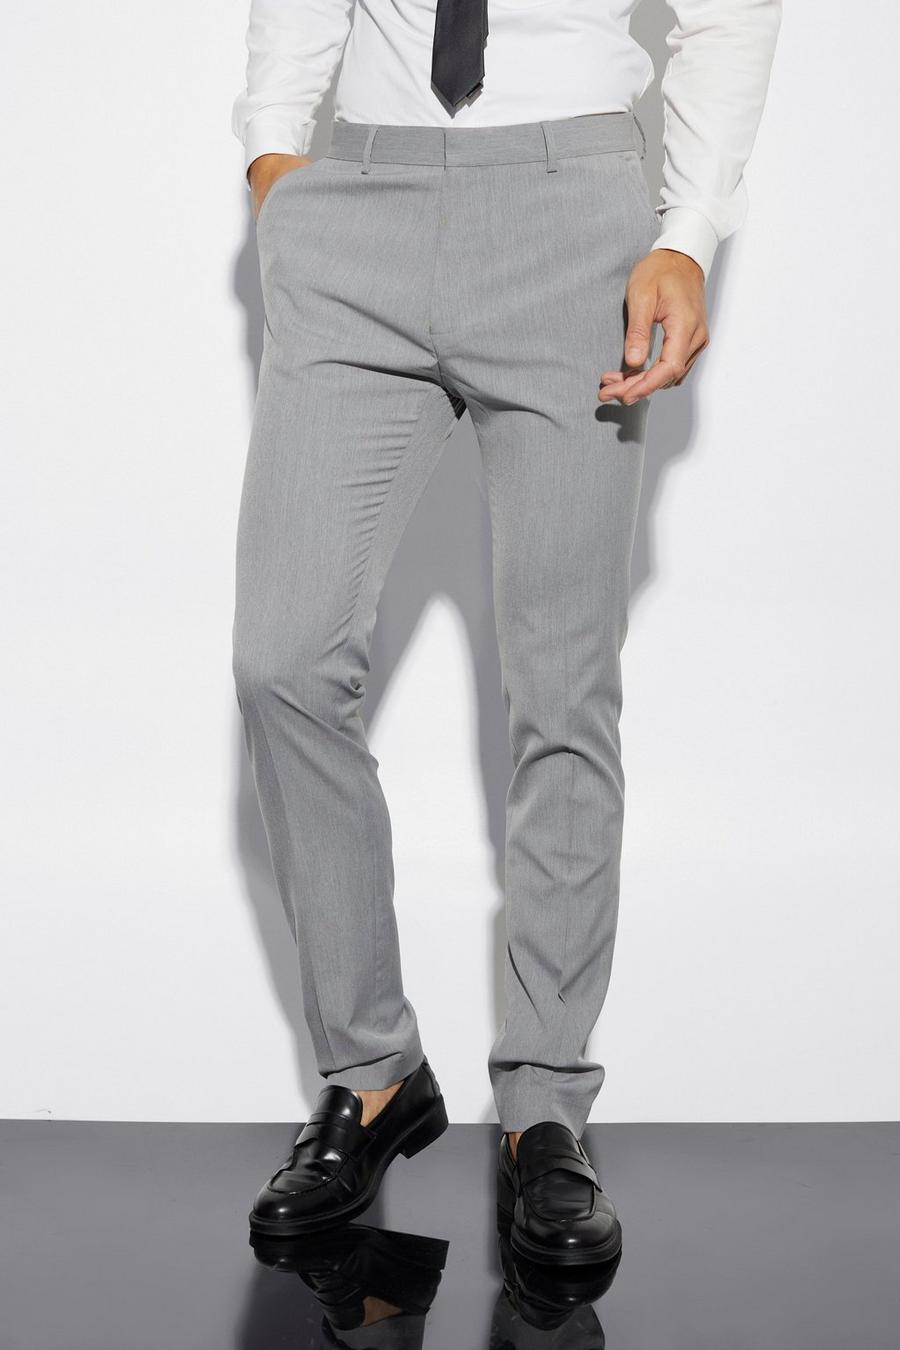 Grey Tall Skinny Suit Pants